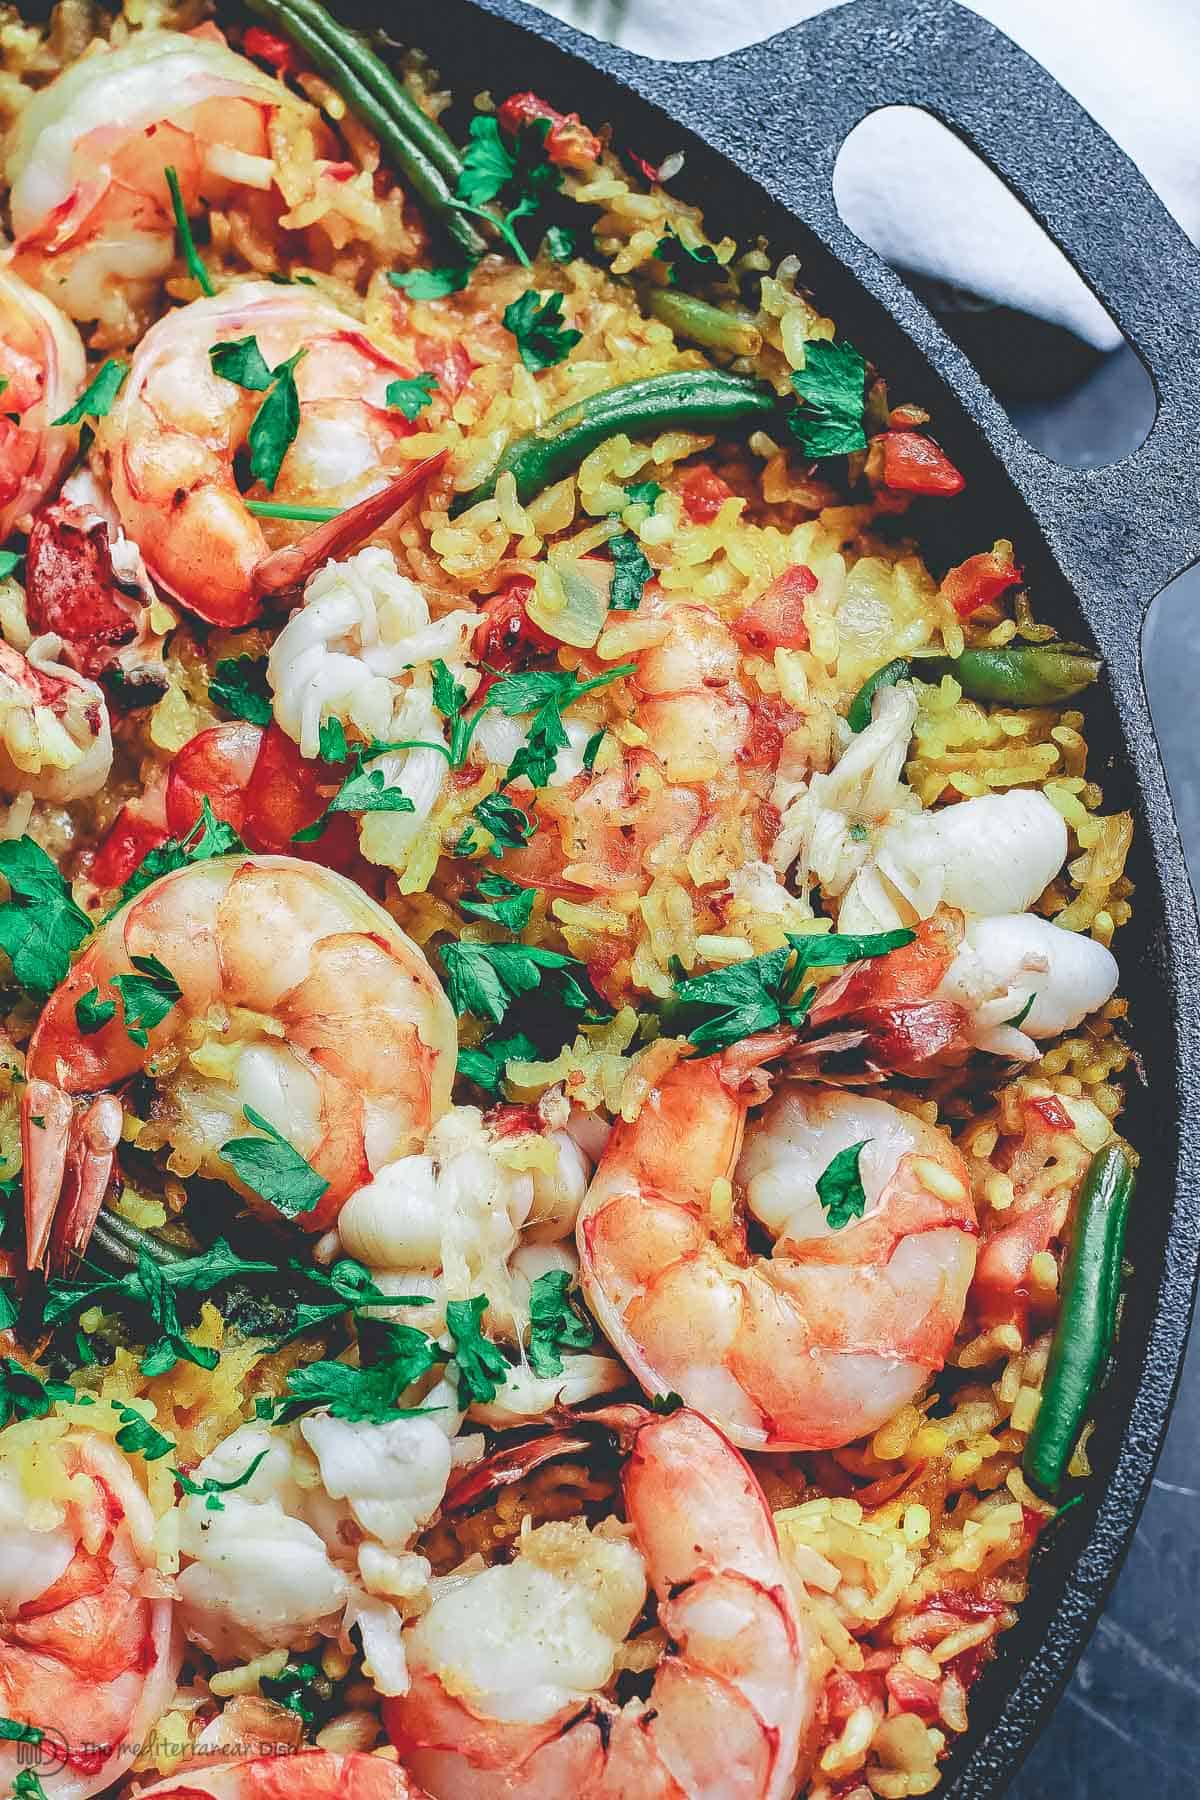 https://www.themediterraneandish.com/wp-content/uploads/2015/04/Spanish-Seafood-Paella-Recipe-10.jpg